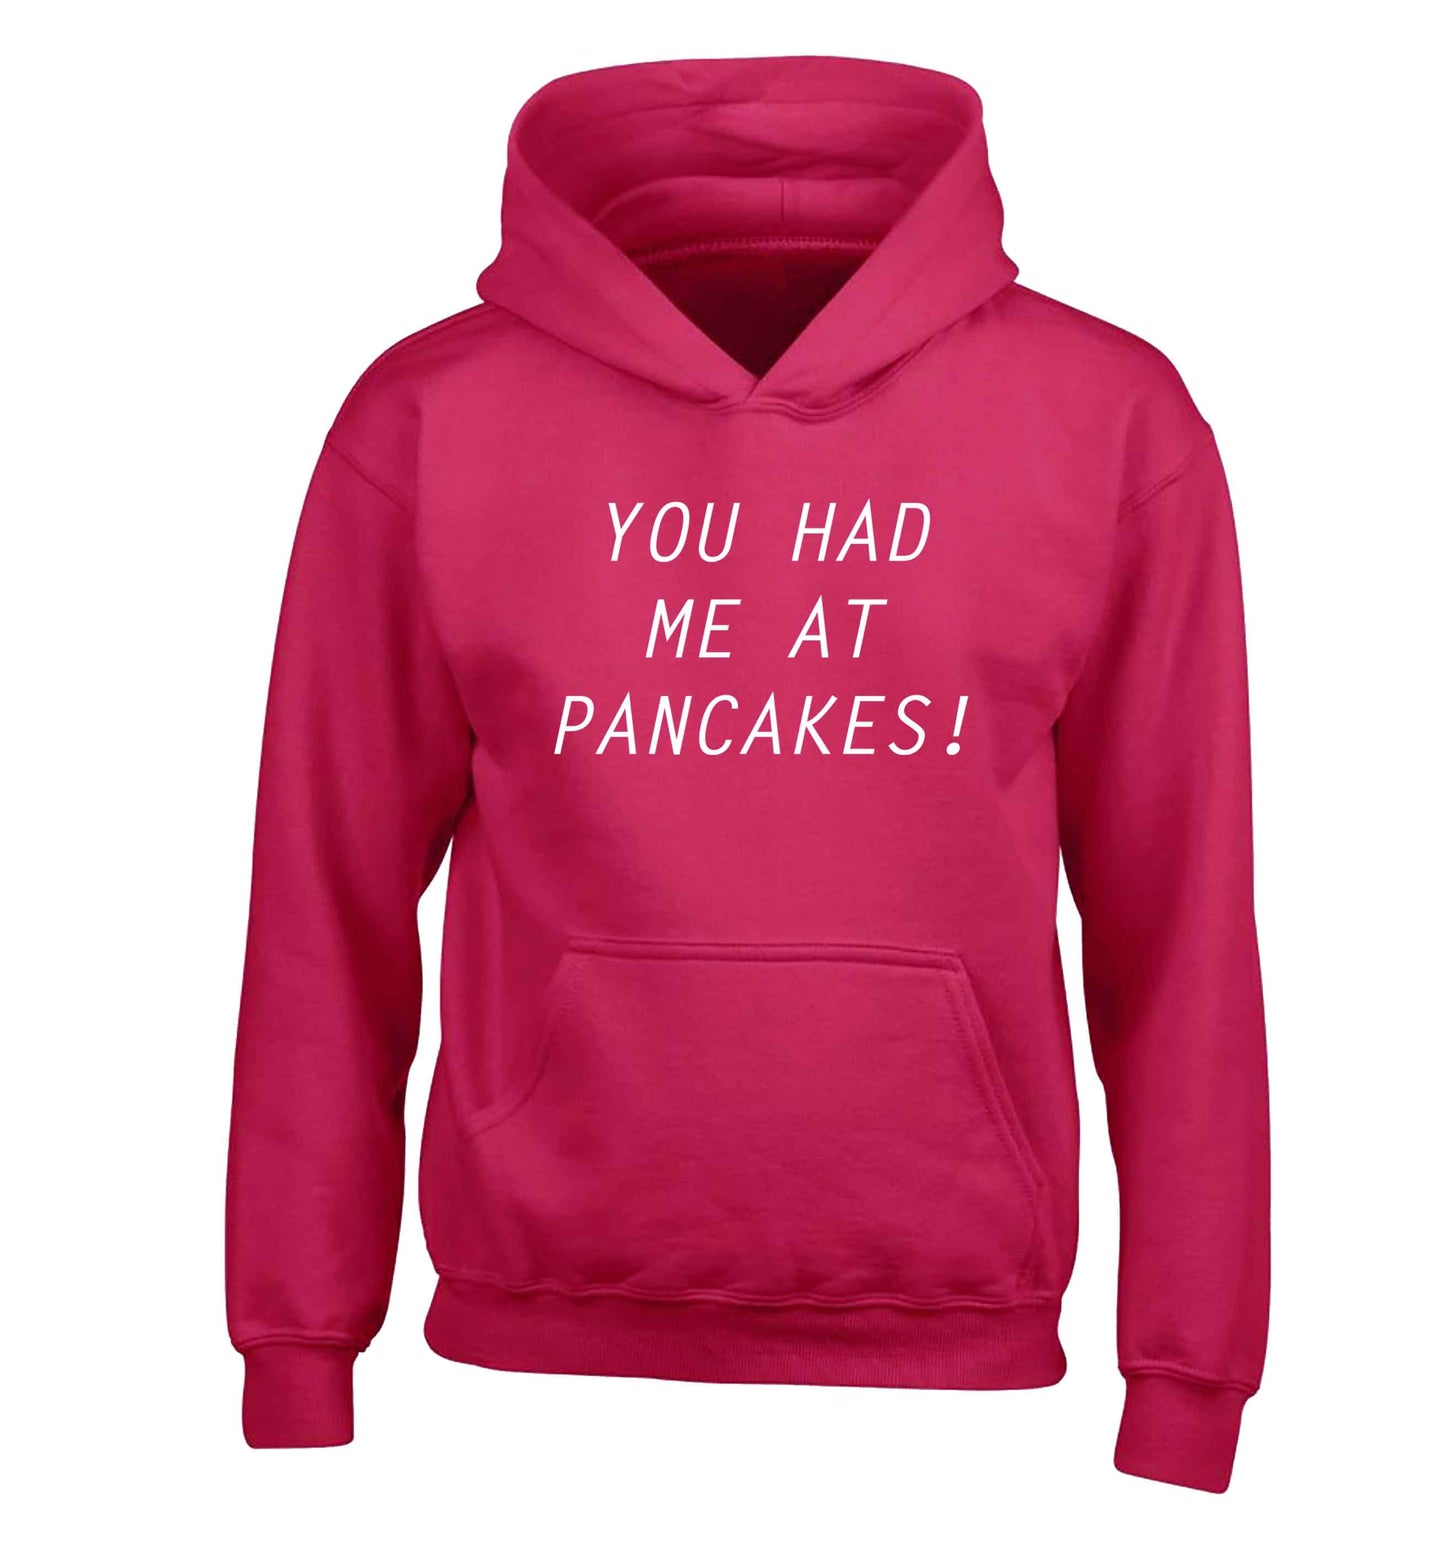 You had me at pancakes children's pink hoodie 12-13 Years